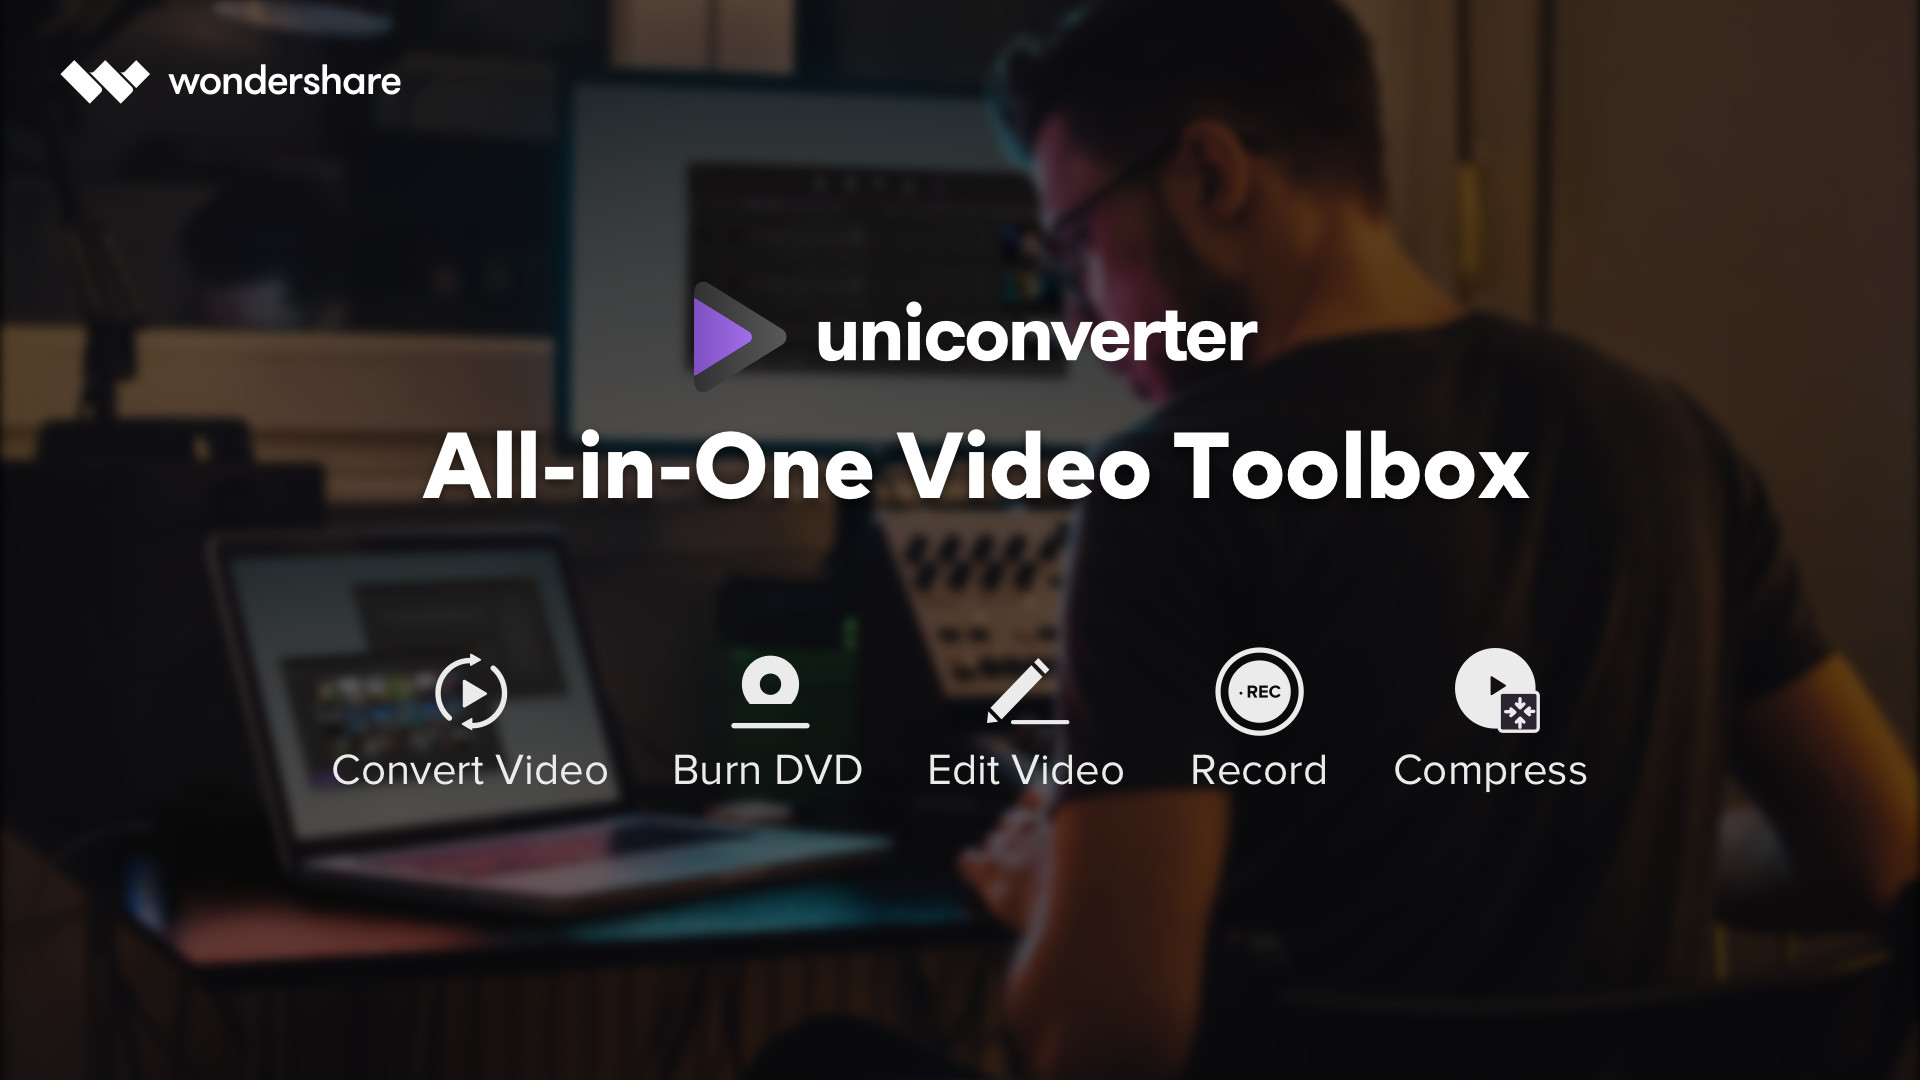 Wondershare UniConverter 15.0.1.5 instal the new version for ipod